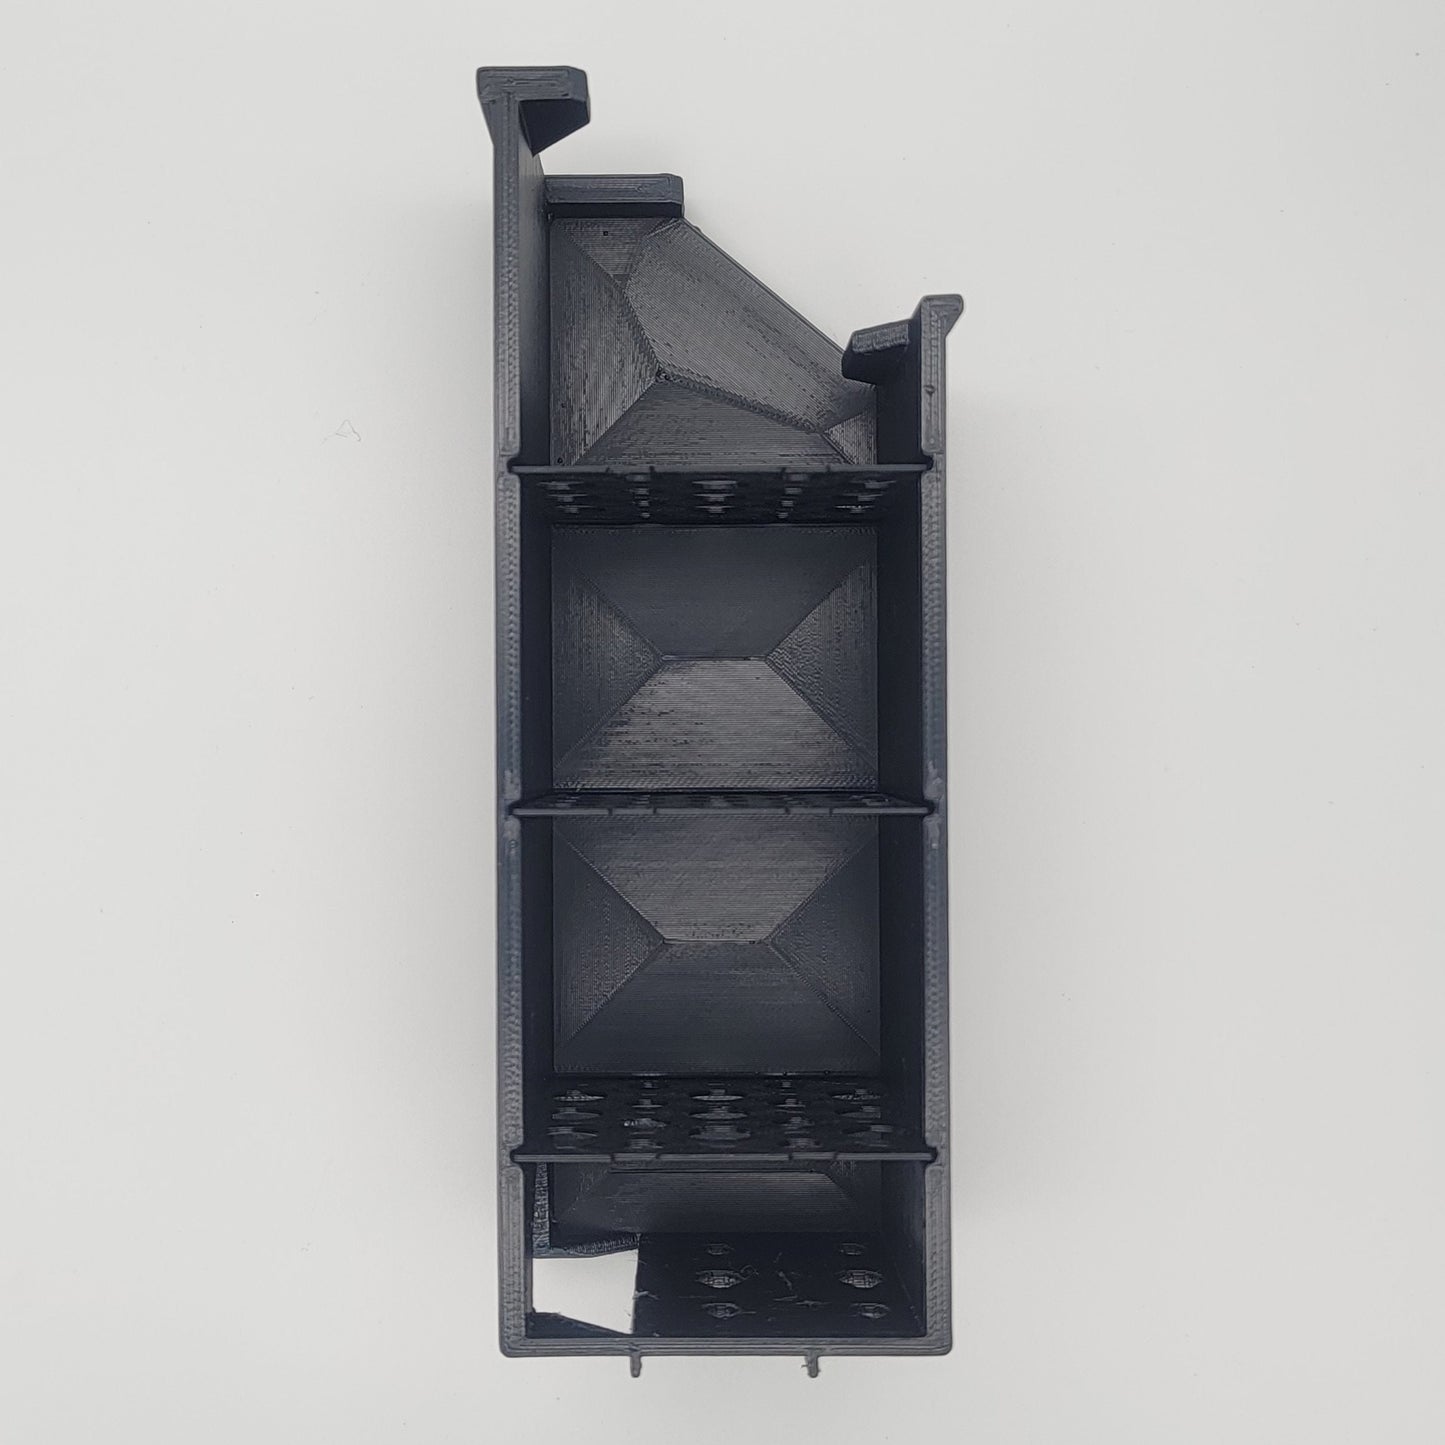 Imagitarium 3.7 Gallon Media Basket 4-Stage Filtration System